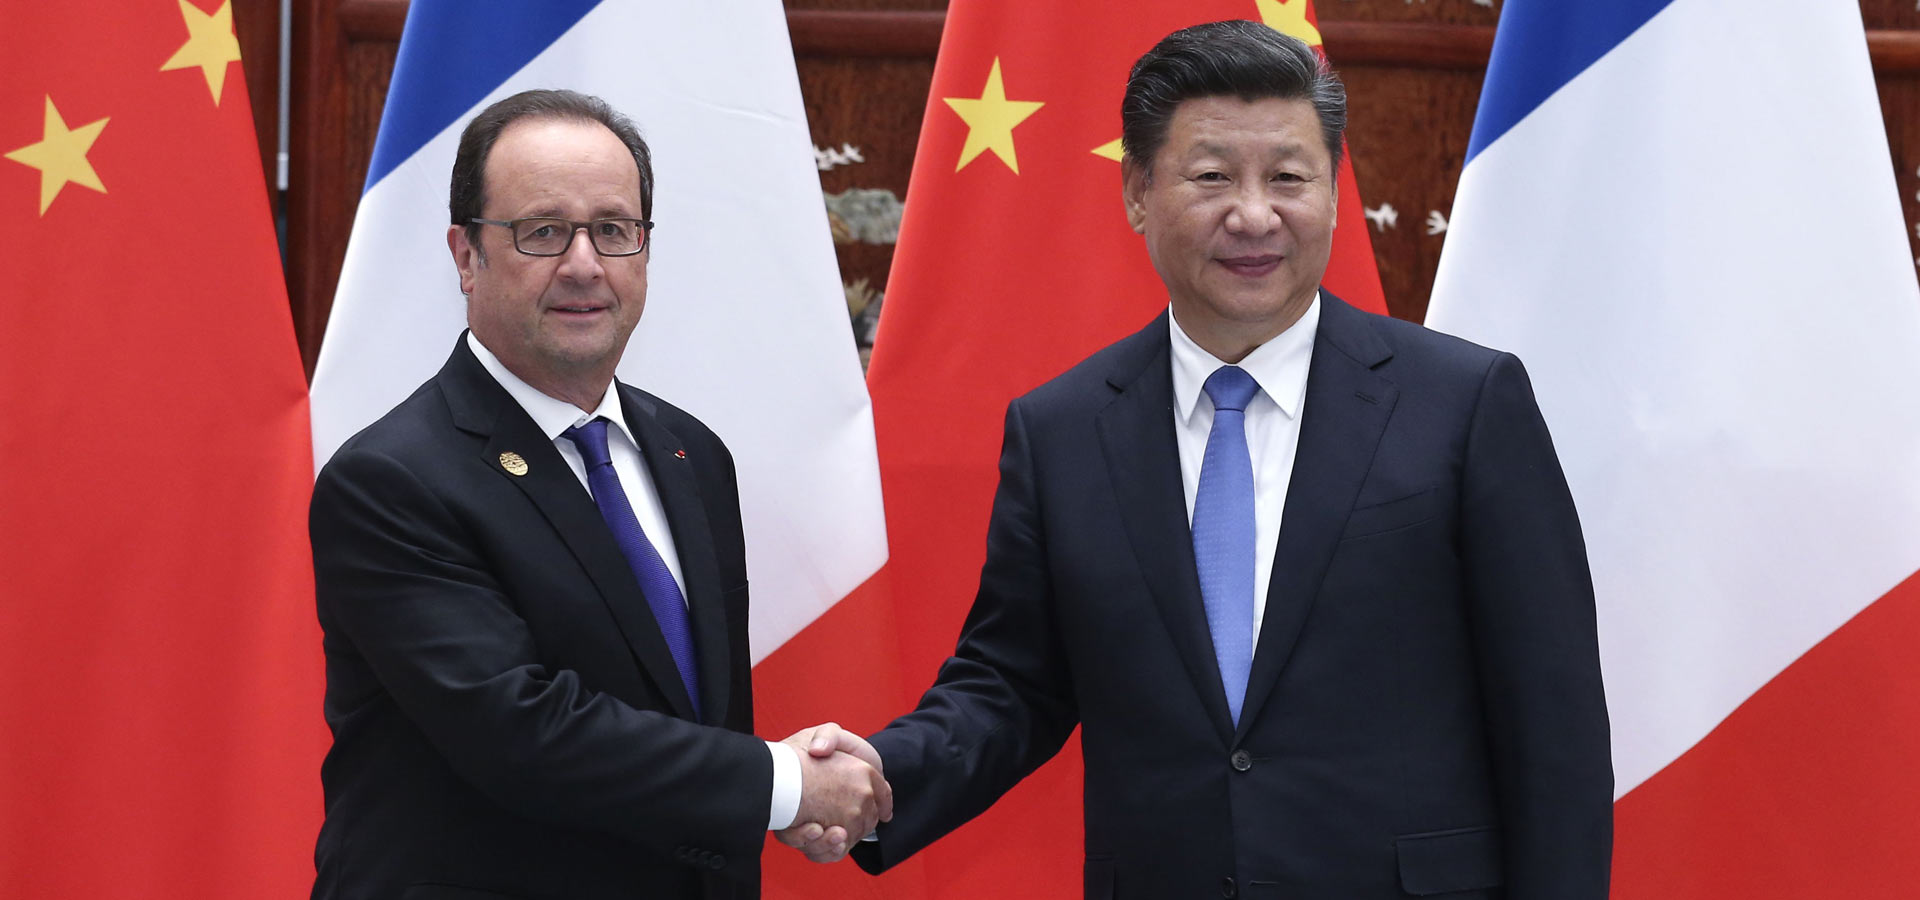 China always values France as important strategic partner, Xi says